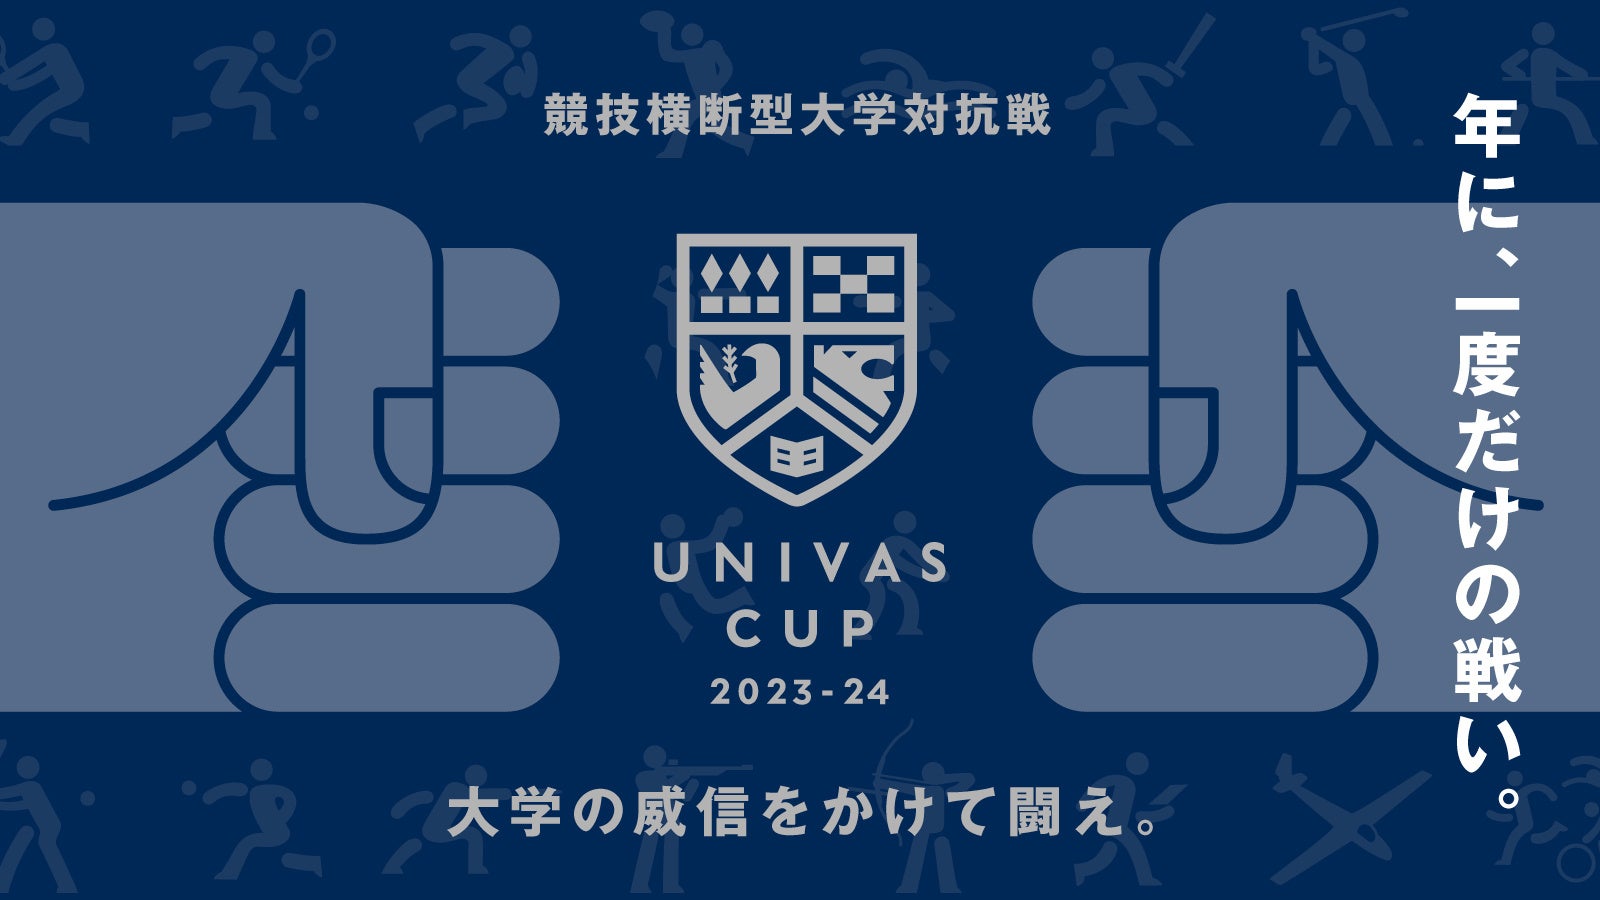 UNIVAS、競技横断型大学対抗戦「UNIVAS CUP 2023-24」総合優勝は早稲田大学が5連覇を達成！新設された国公立大学部門では鹿屋体育大学が初の栄冠に輝く！